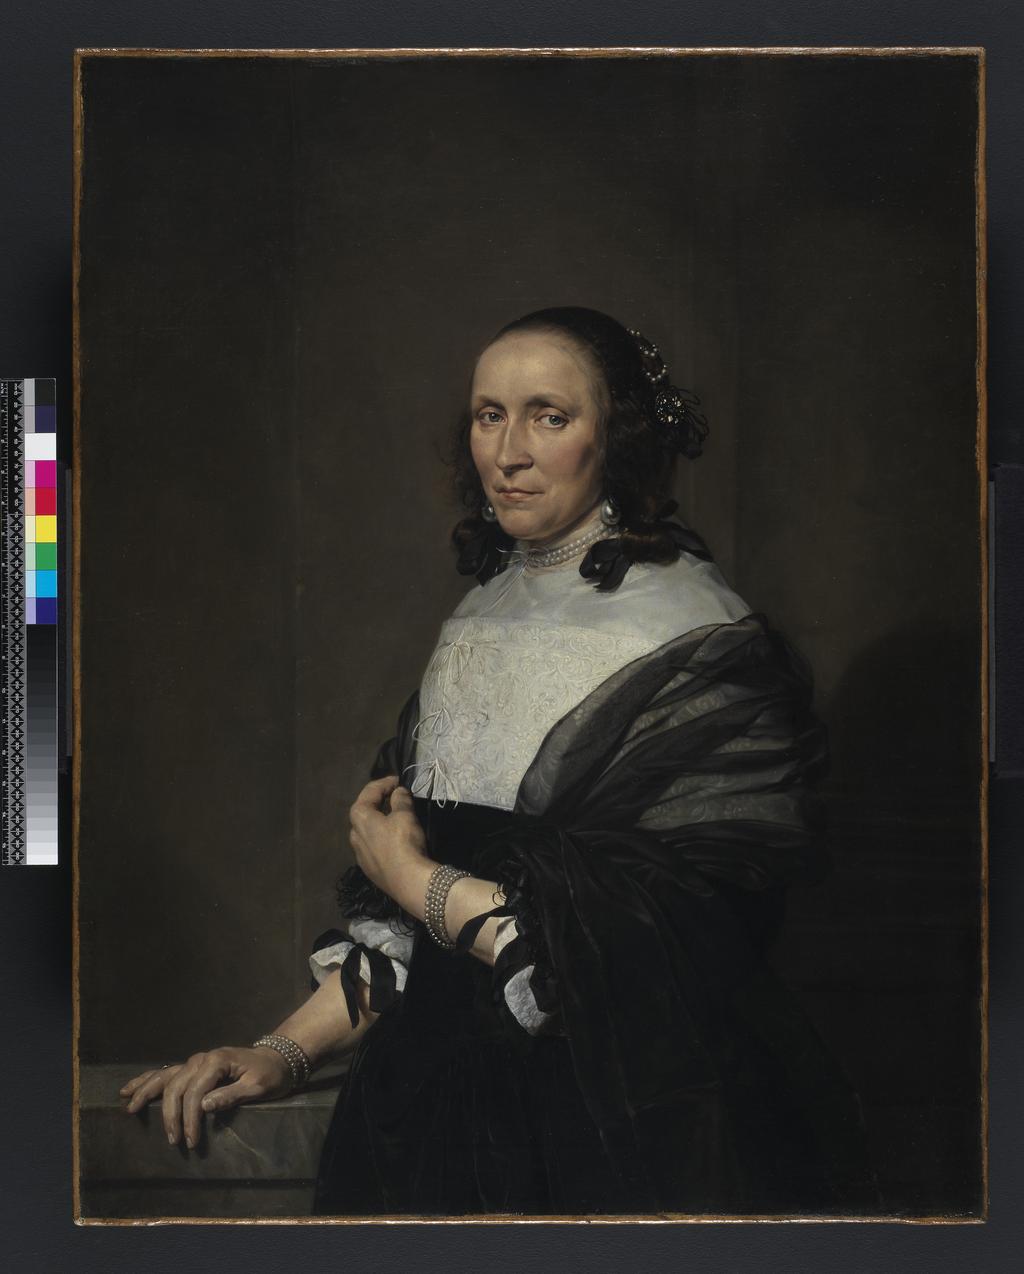 An image of Portrait of a woman. Bray, Jan de (Dutch, c.1626/7-1697). Oil on canvas, height 97.4 cm, width 76.8 cm, 1660.